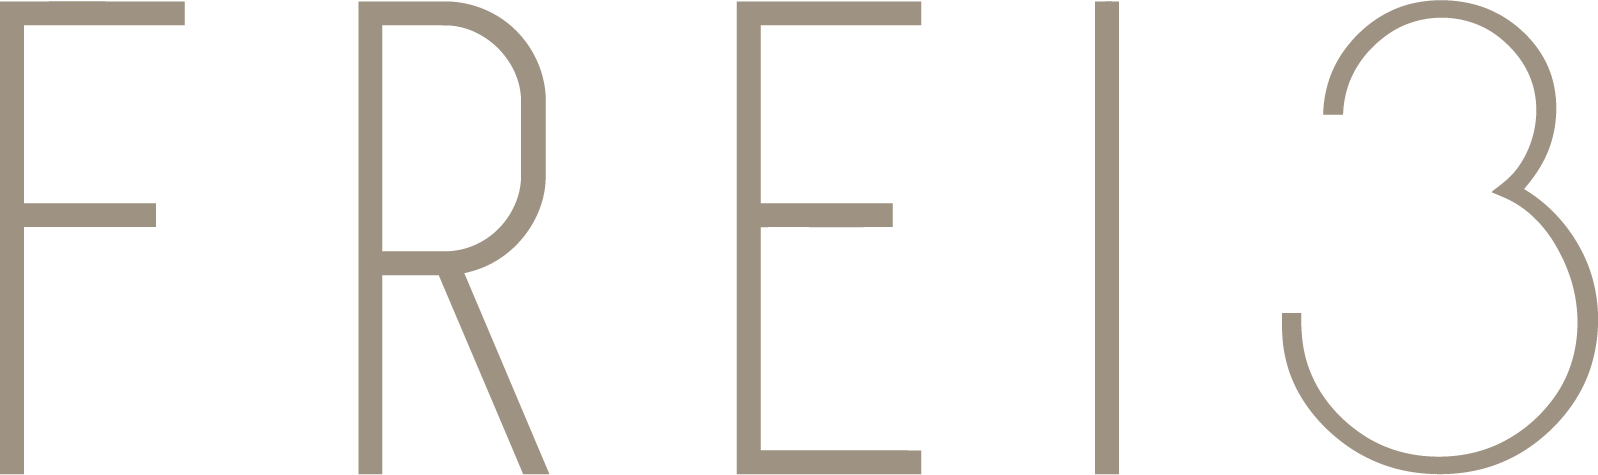 Frei3-Logo-Final